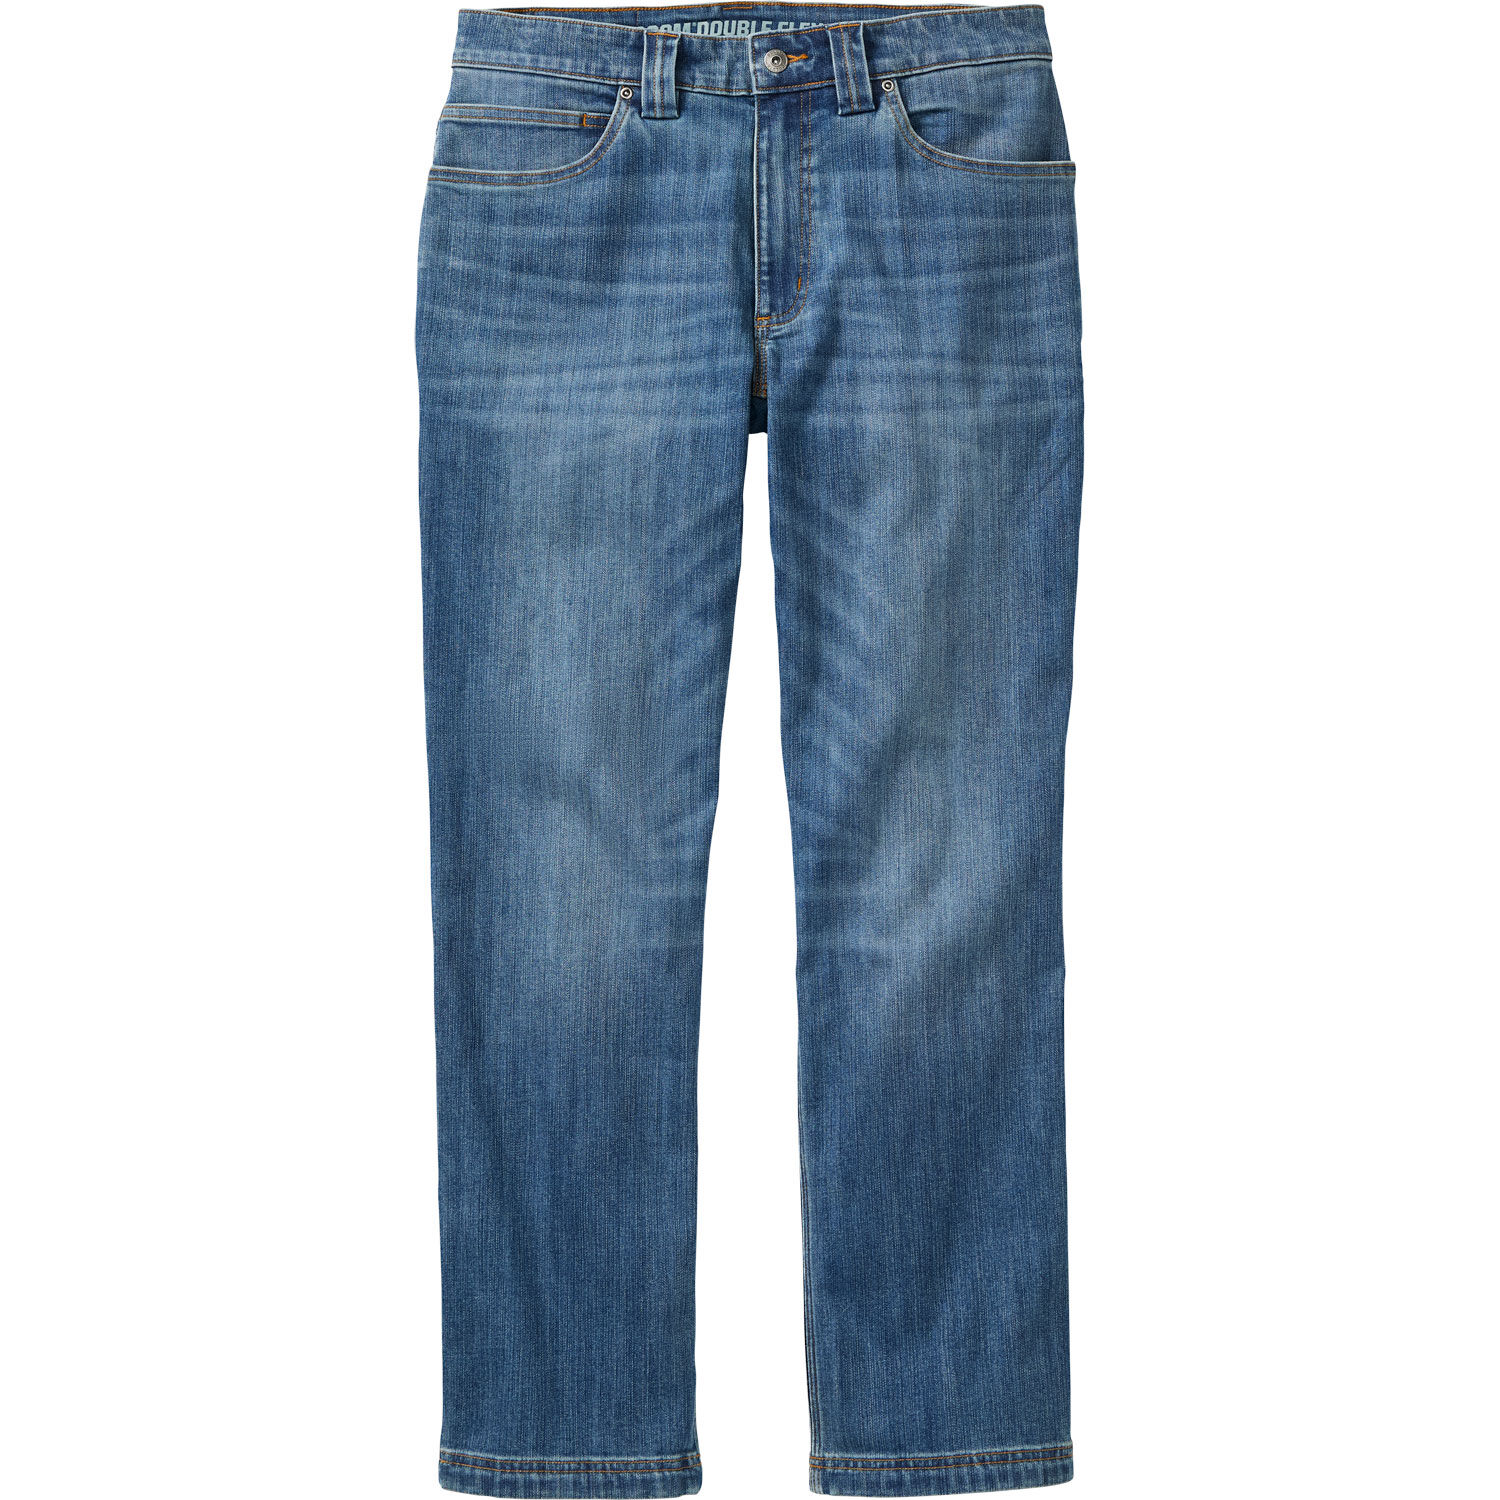 Buy Navy Blue Cargo Pants | Shop Now – Reccy